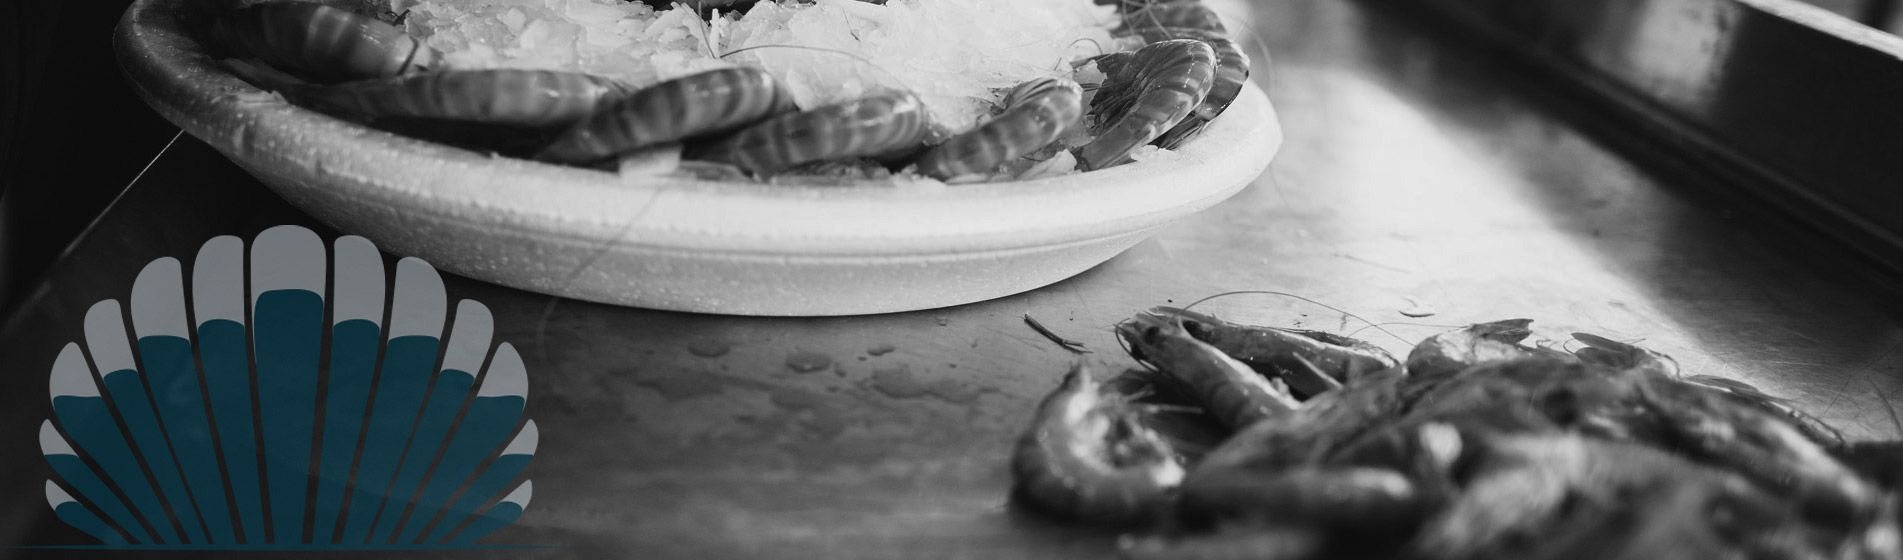 Degustation huitre isigny sur mer